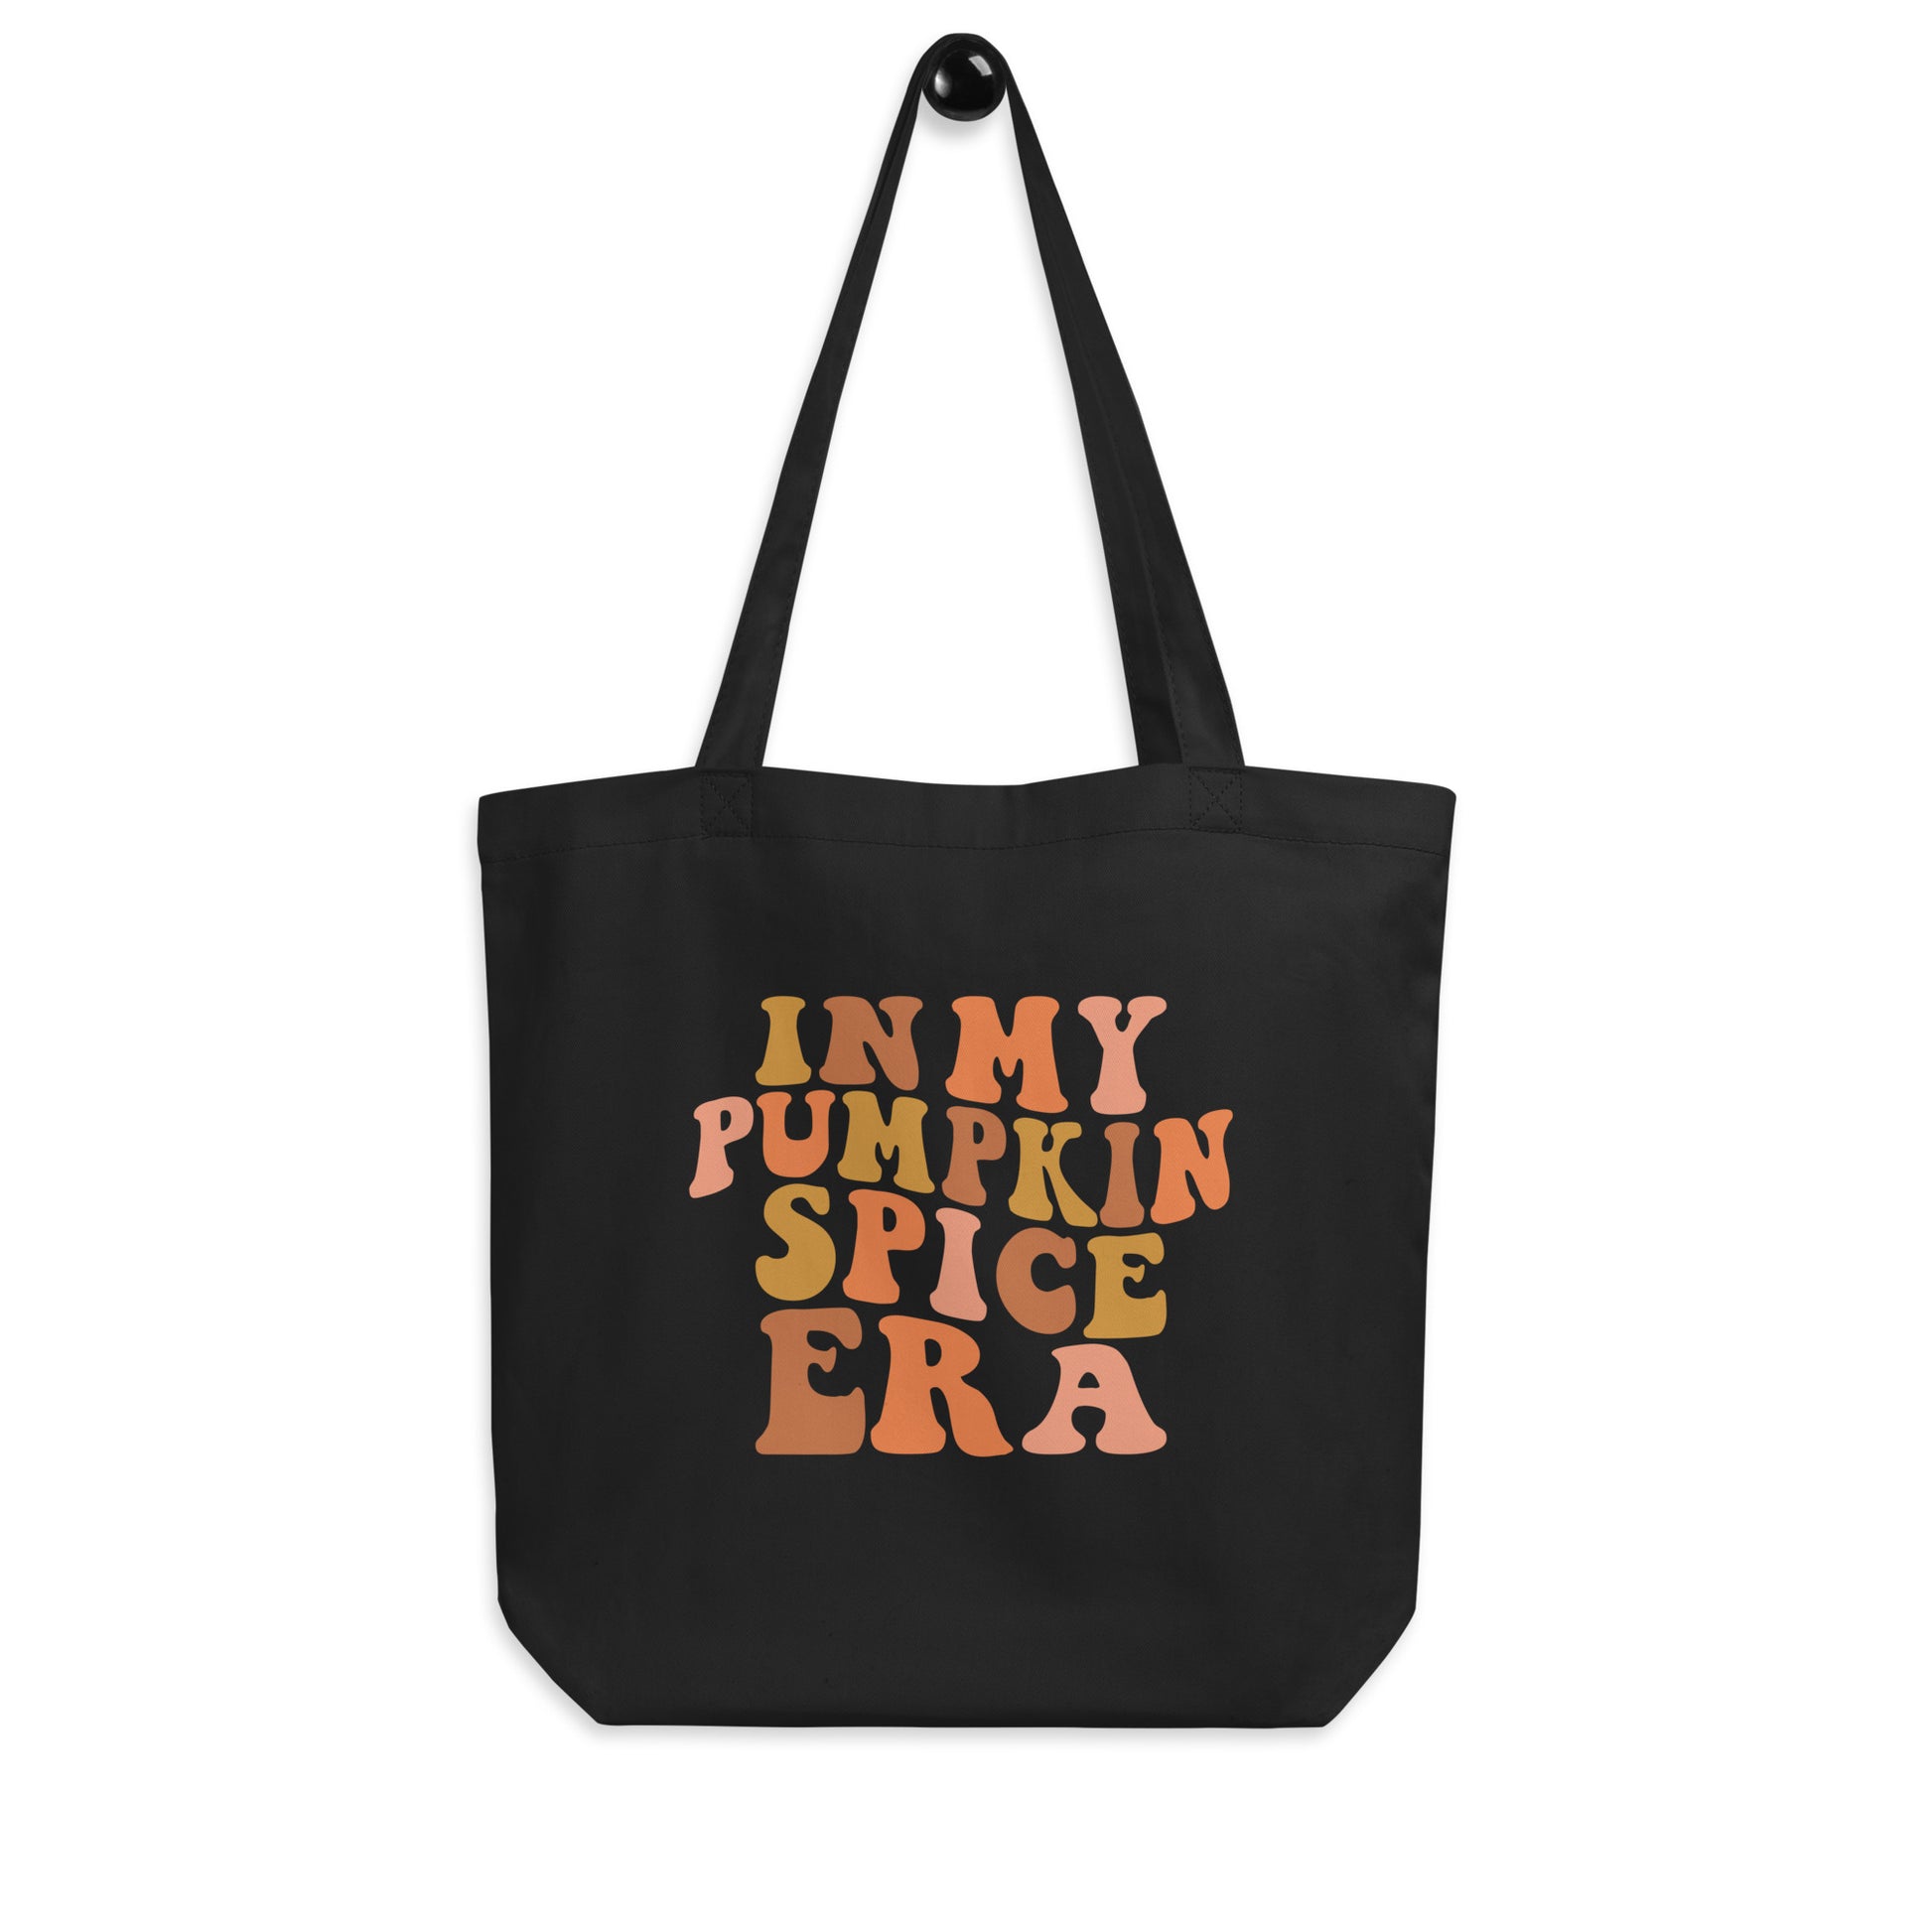 Black cotton tote bag that says "In My Pumpkin Spice Era"